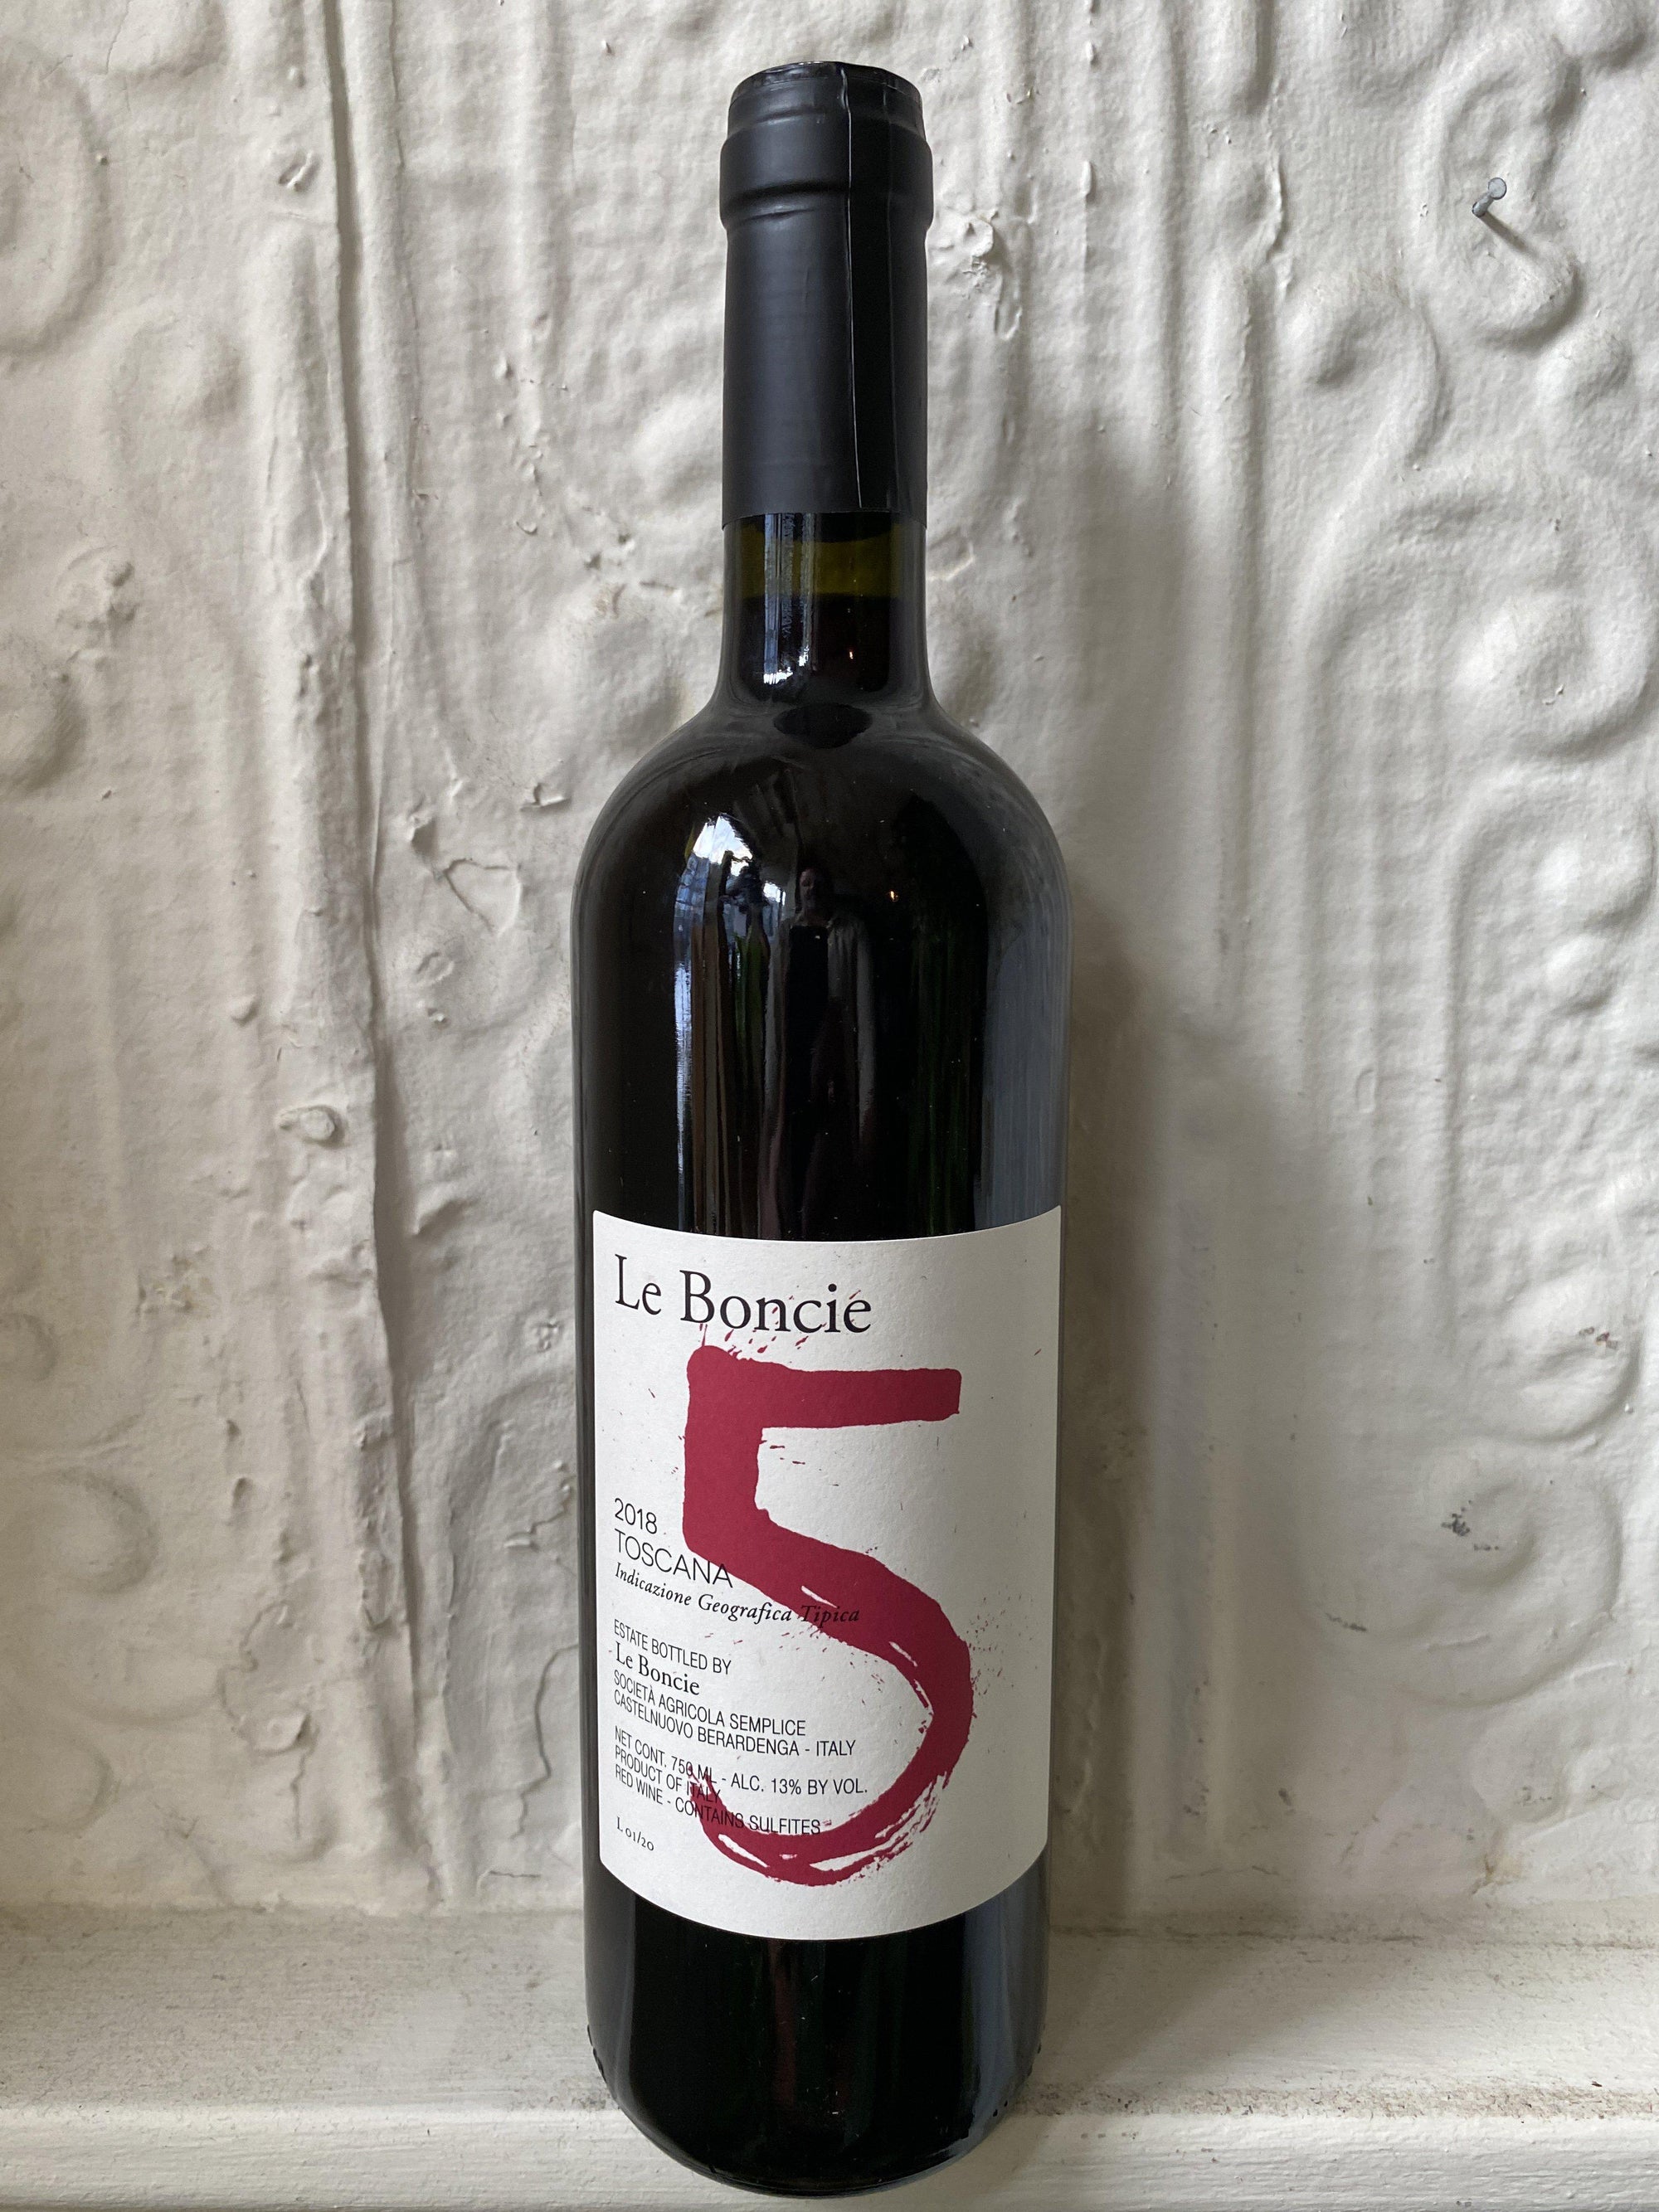 Rosso di Toscana "Cinque", Podere Le Boncie 2018 (Tuscany, Italy)-Wine-Bibber & Bell